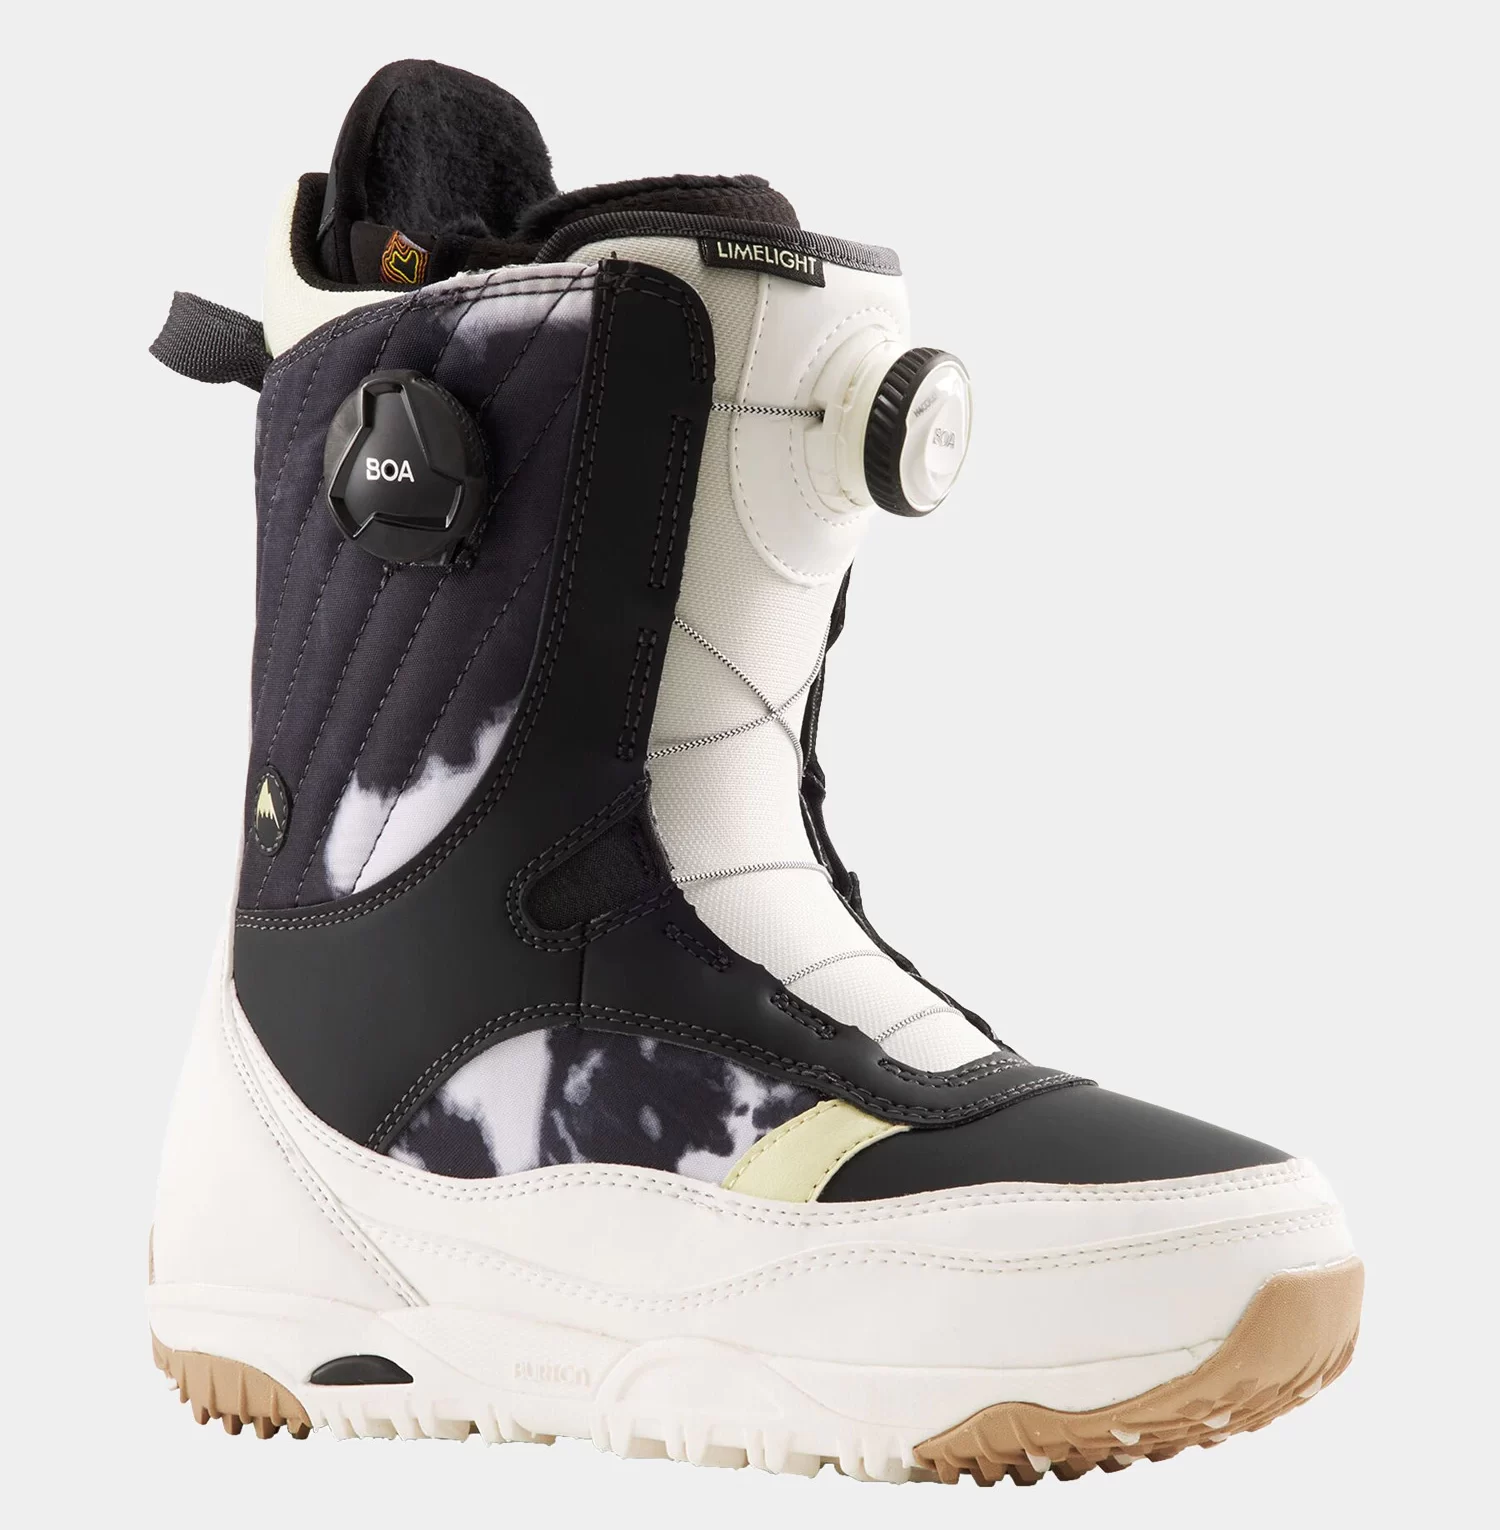 1258030-burton-limelight-boa-snowboard-boots-wmn-stout-wht-acid-wash-w1920w